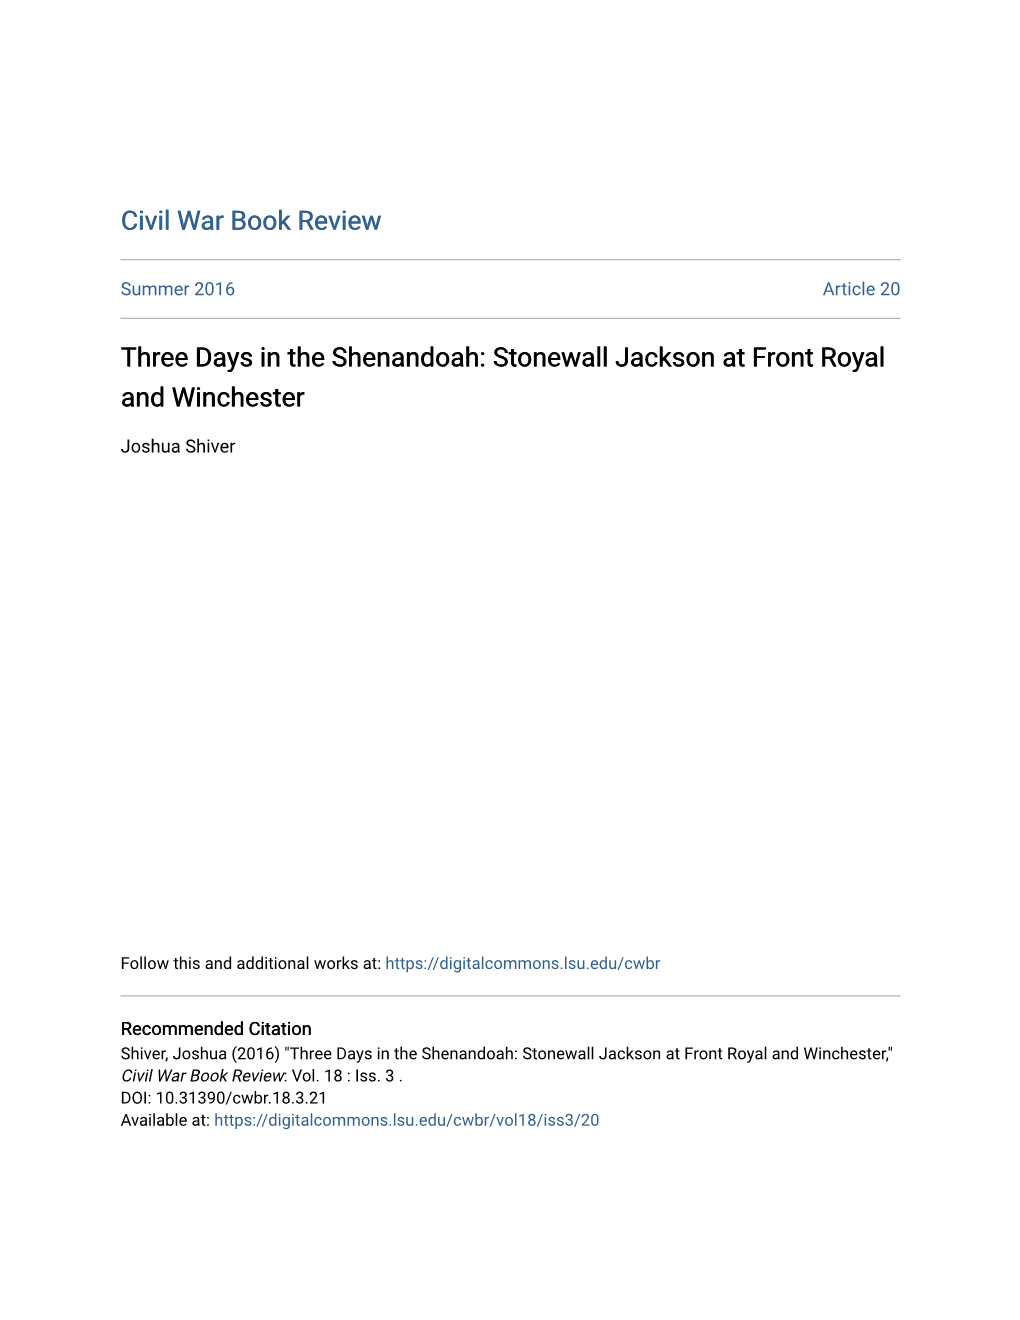 Stonewall Jackson at Front Royal and Winchester